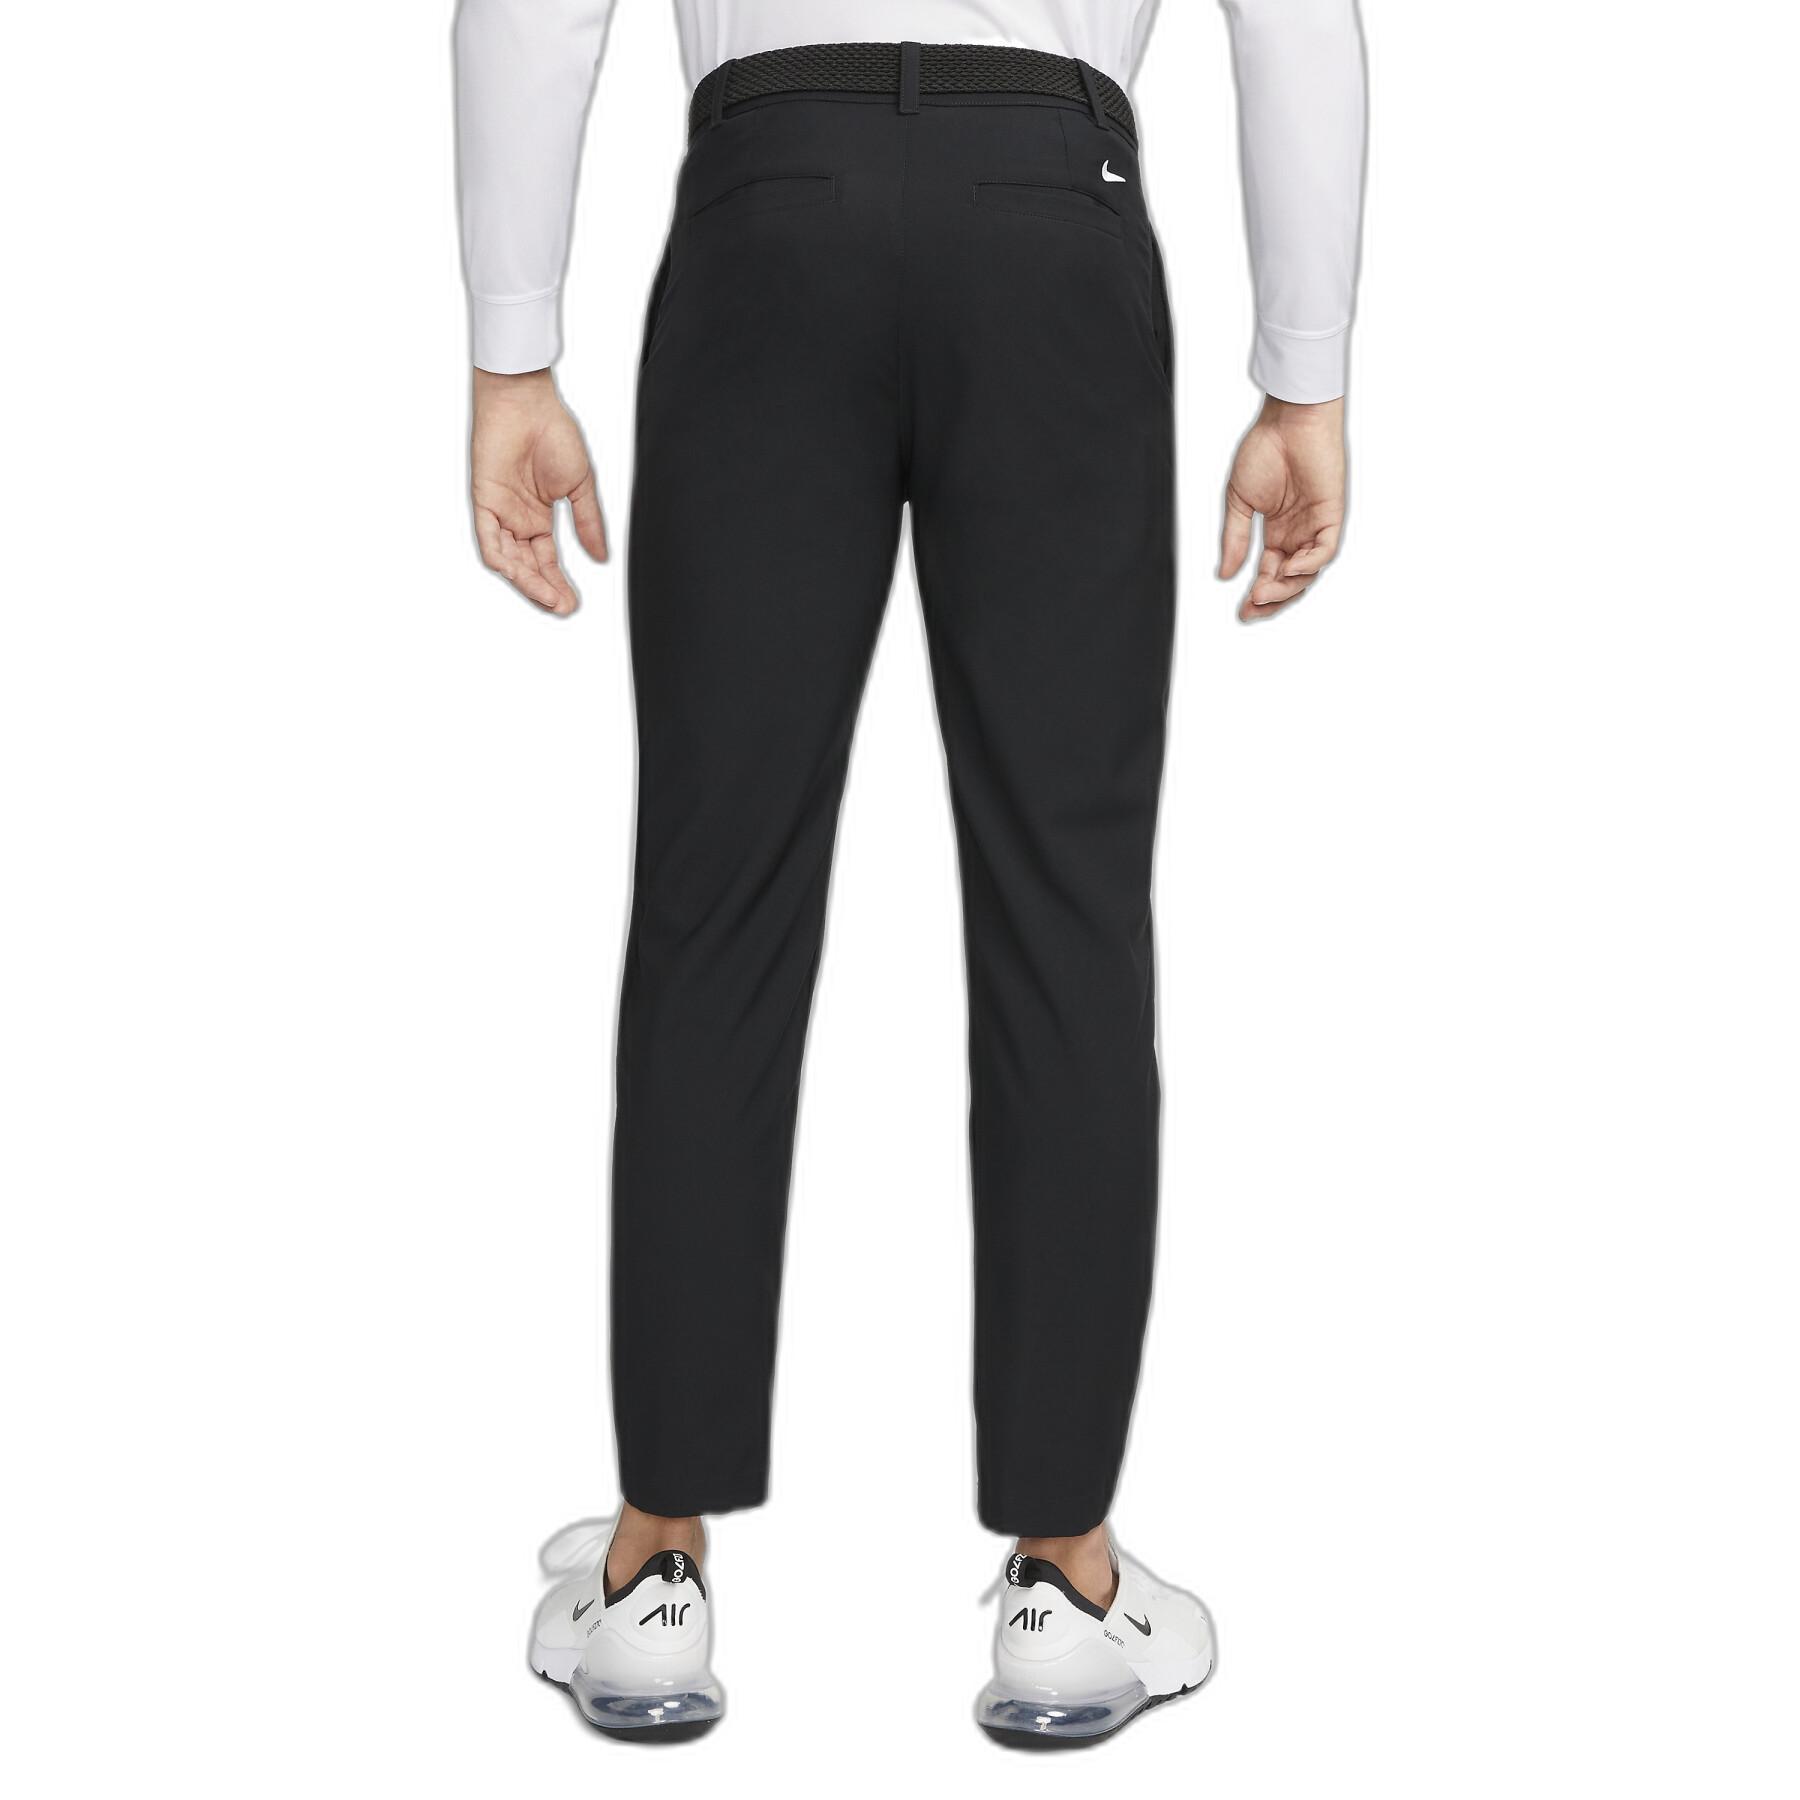 Pantaloni Nike Victory Golf